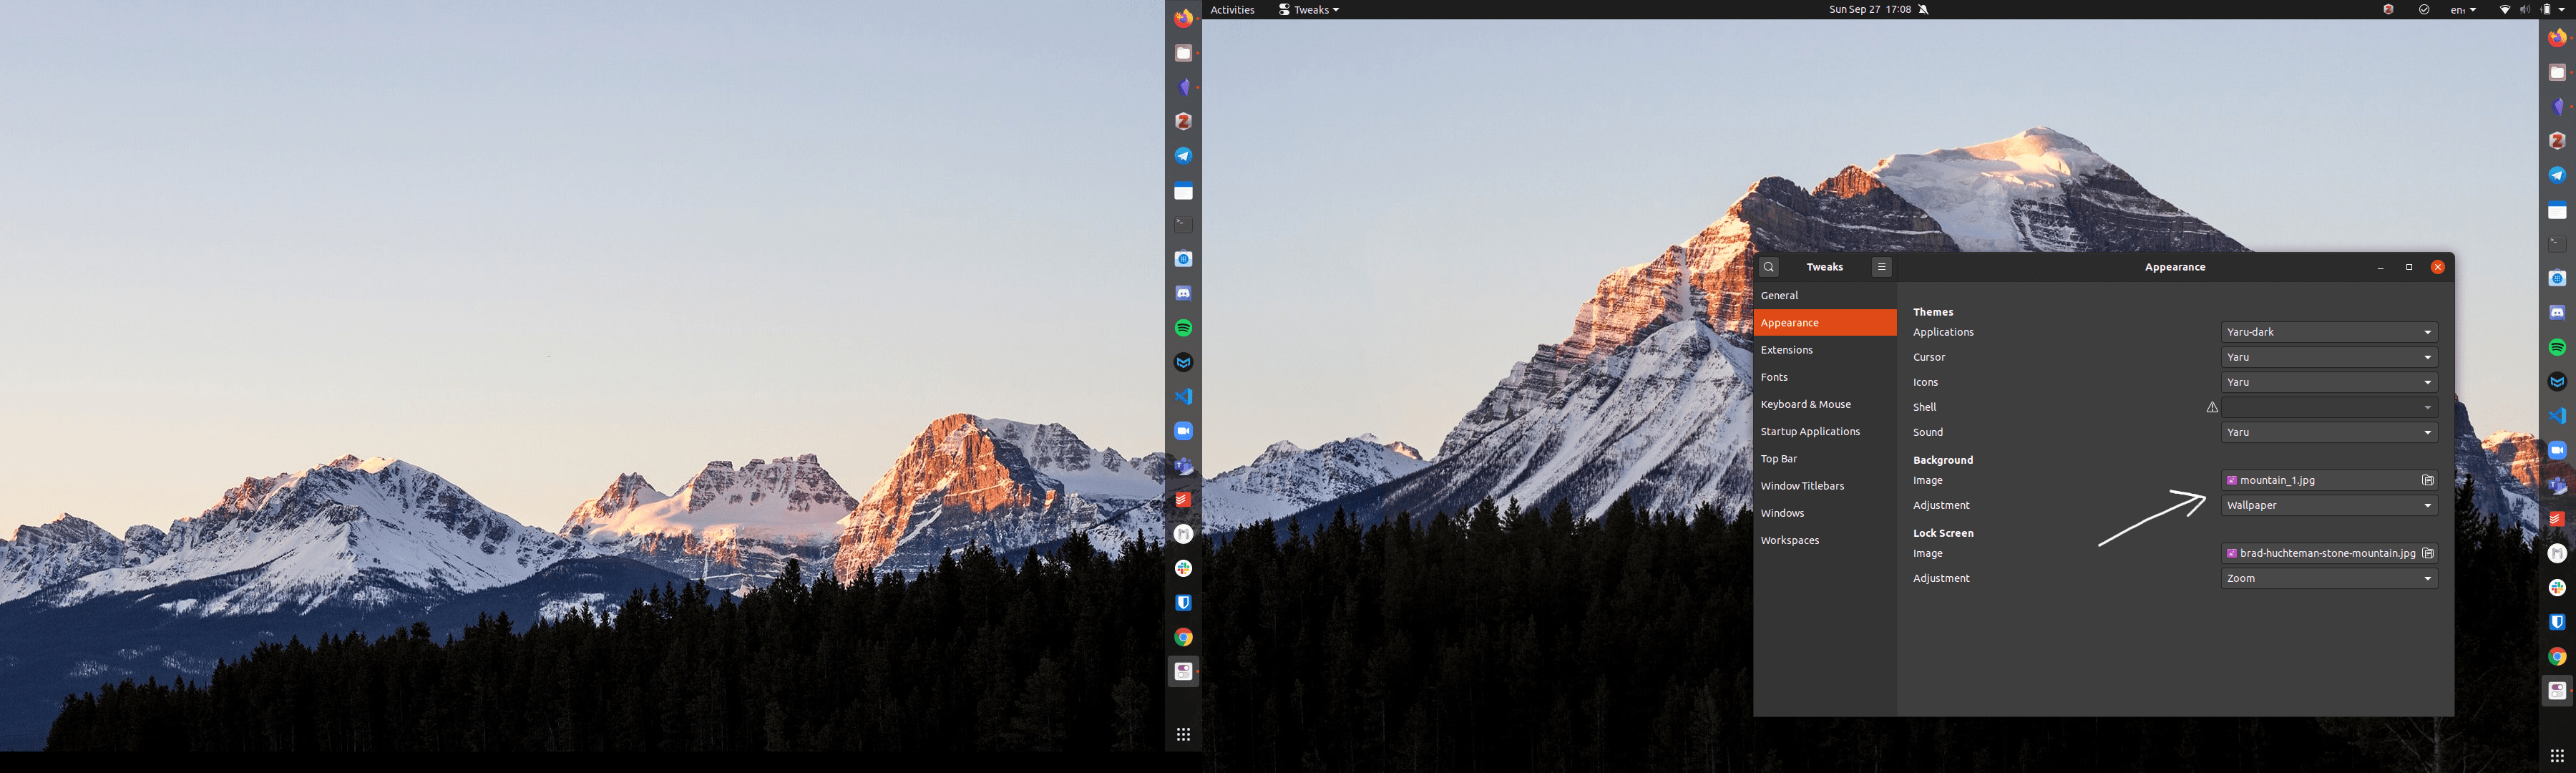 Using a dual-screen wallpaper on Ubuntu